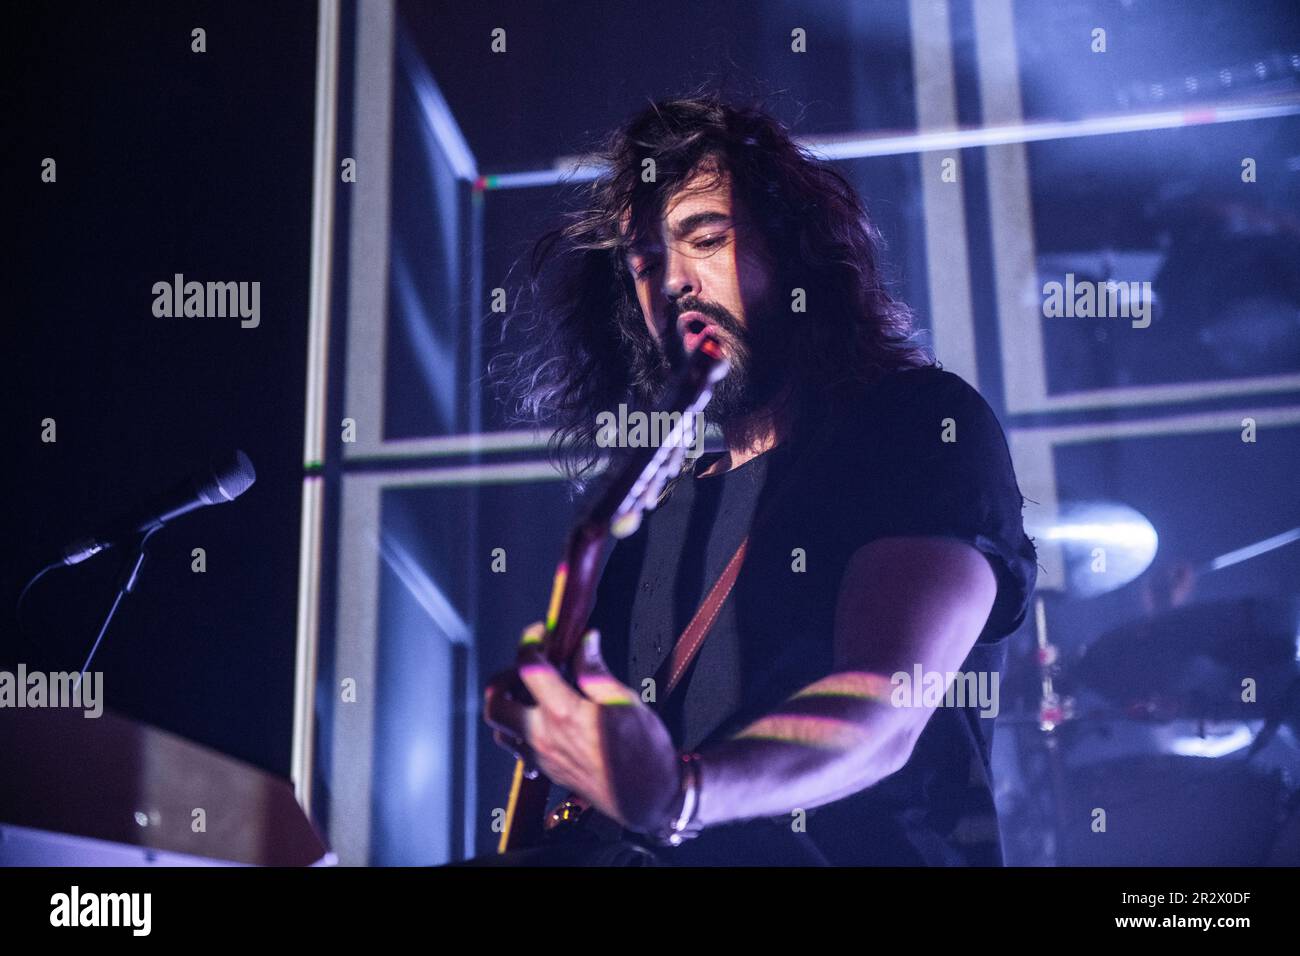 Tokio Hotel performing at Sala Apolo, Barcelona 12 May 2023. Photographer: Ale Espaliat Stock Photo